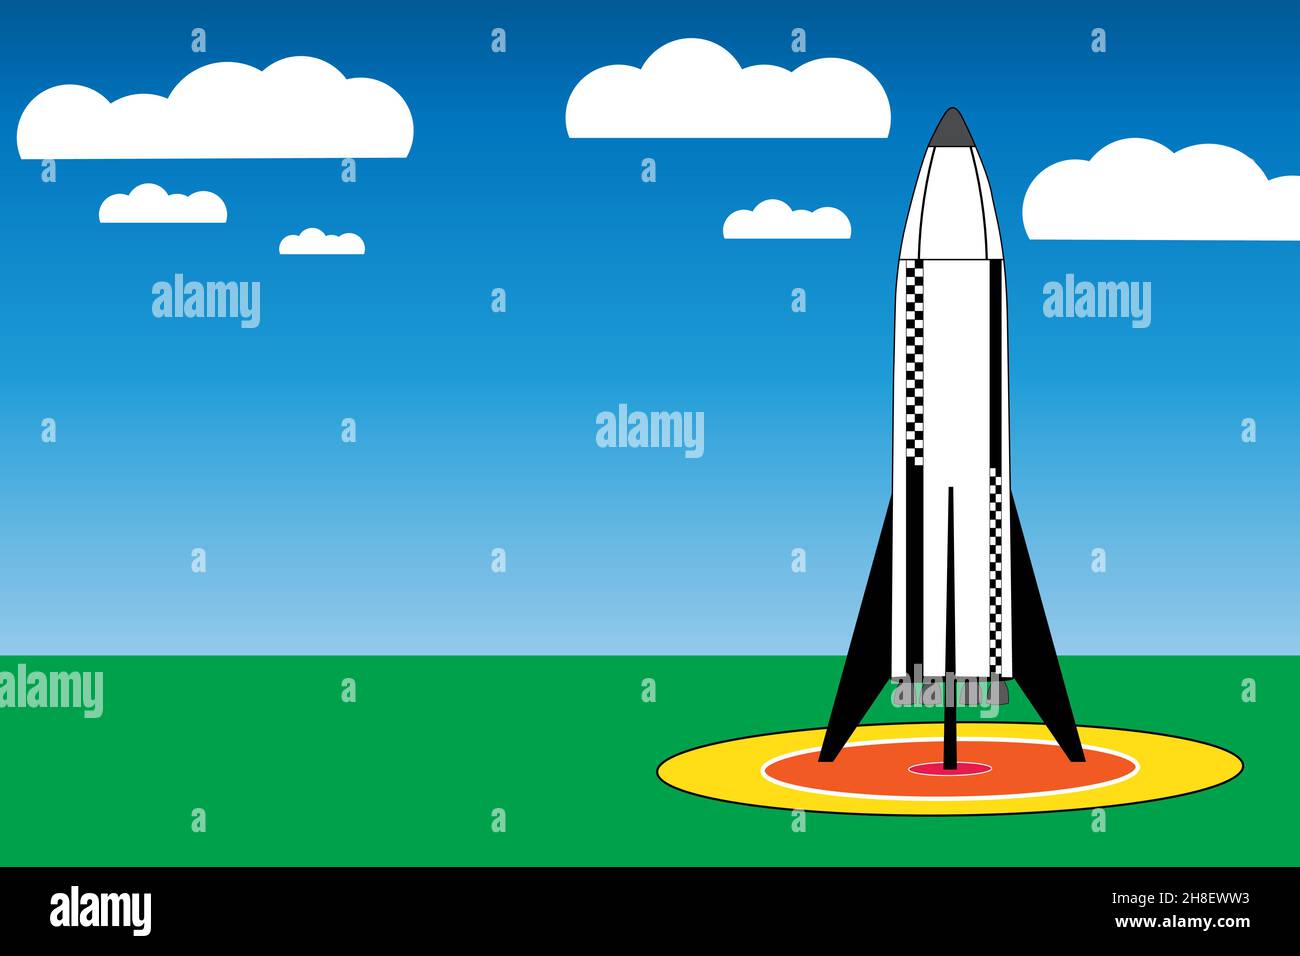 Cartoon Rakete auf einer Startrampe - Vektor-Illustration Stock Vektor